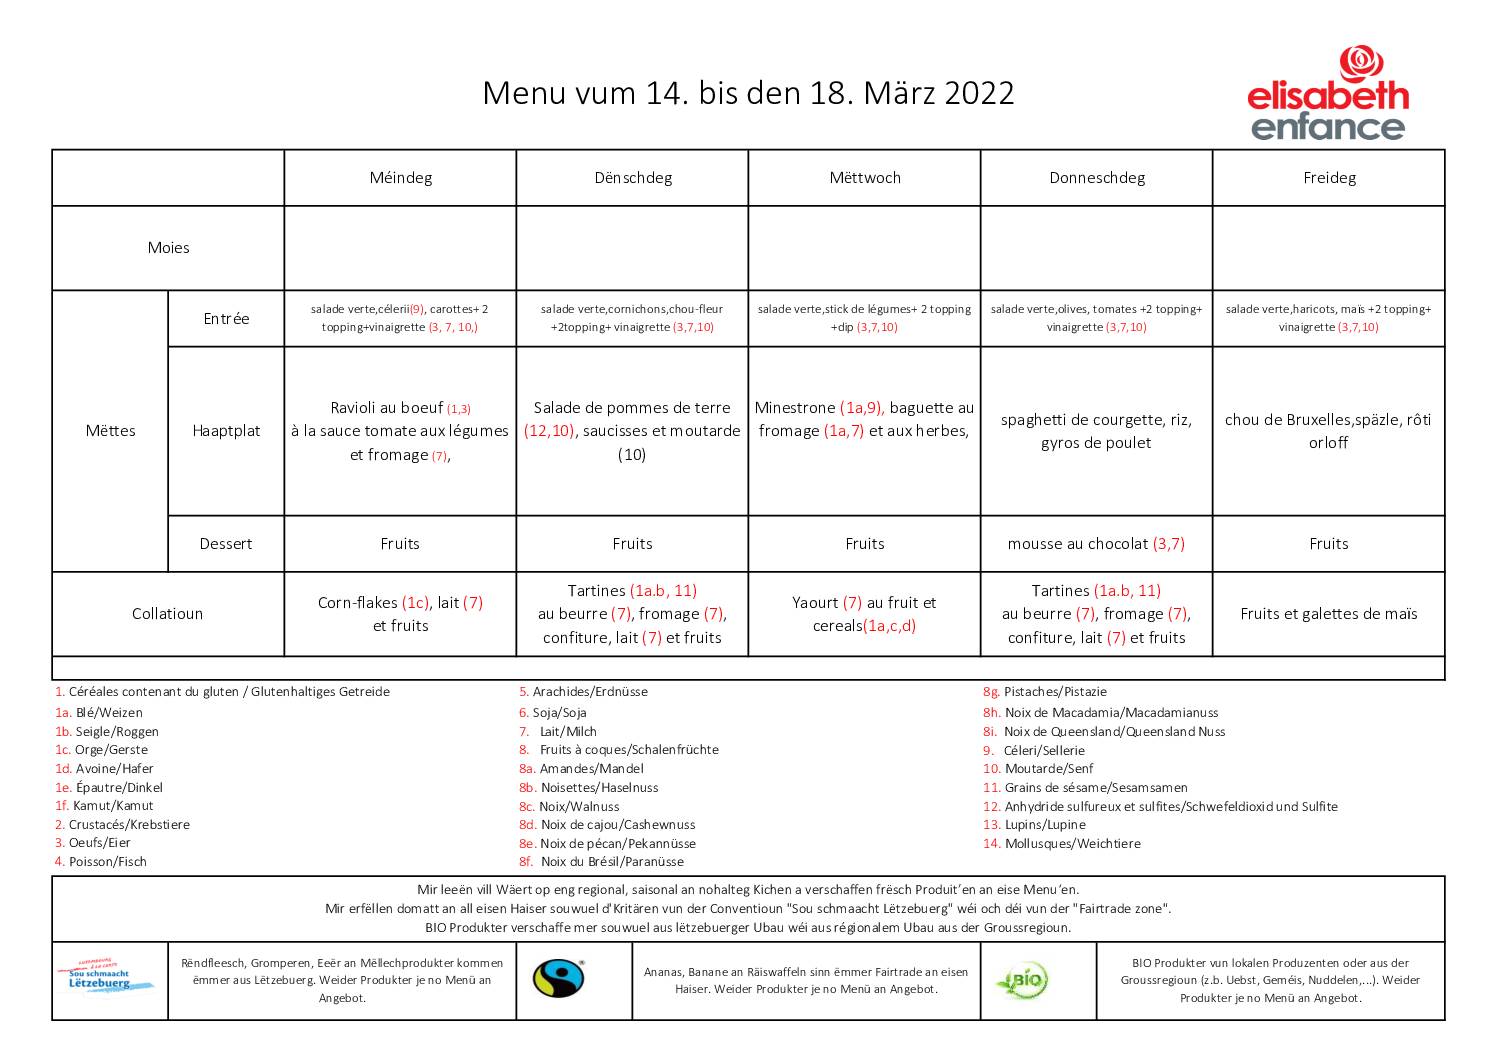 Menus de la semaine du 14 mars 2022 au 18 mars 2022